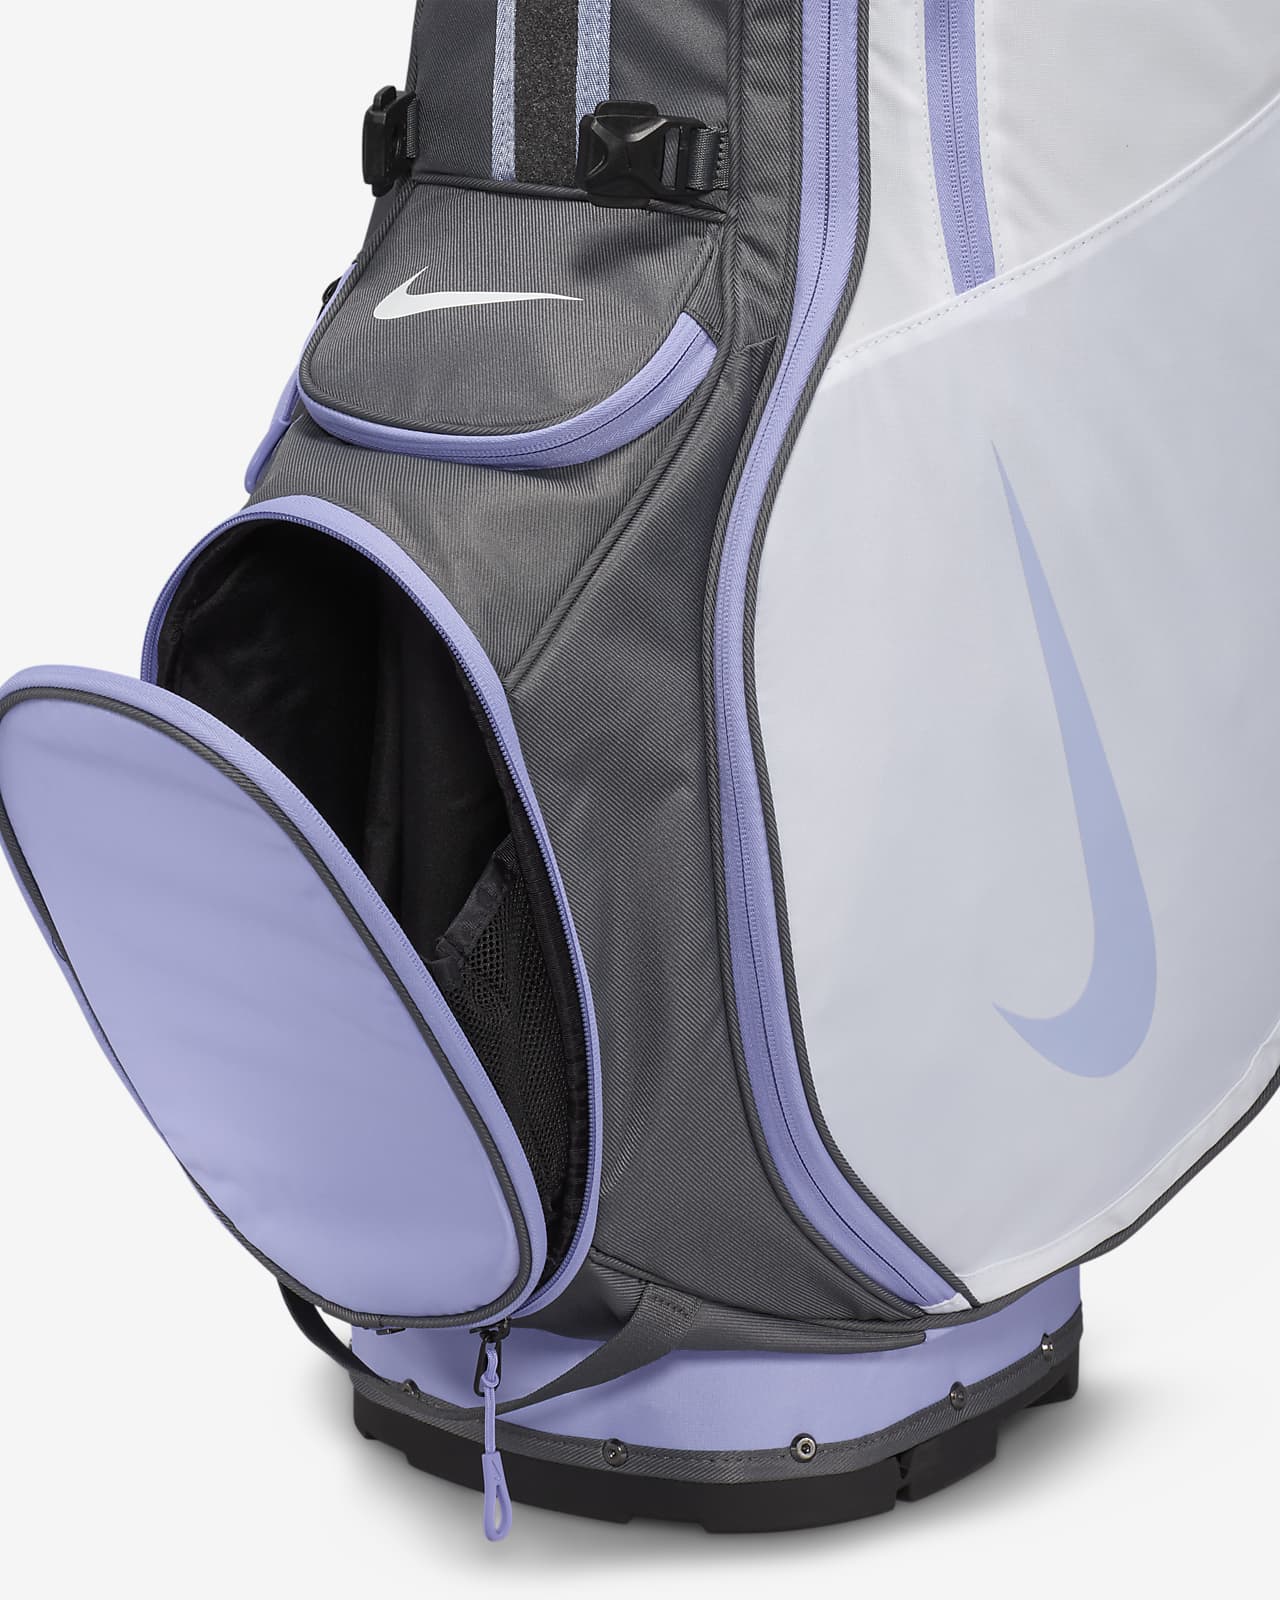 Steken Misleidend Brein Nike Air Hybrid 2 Golf Bag. Nike.com